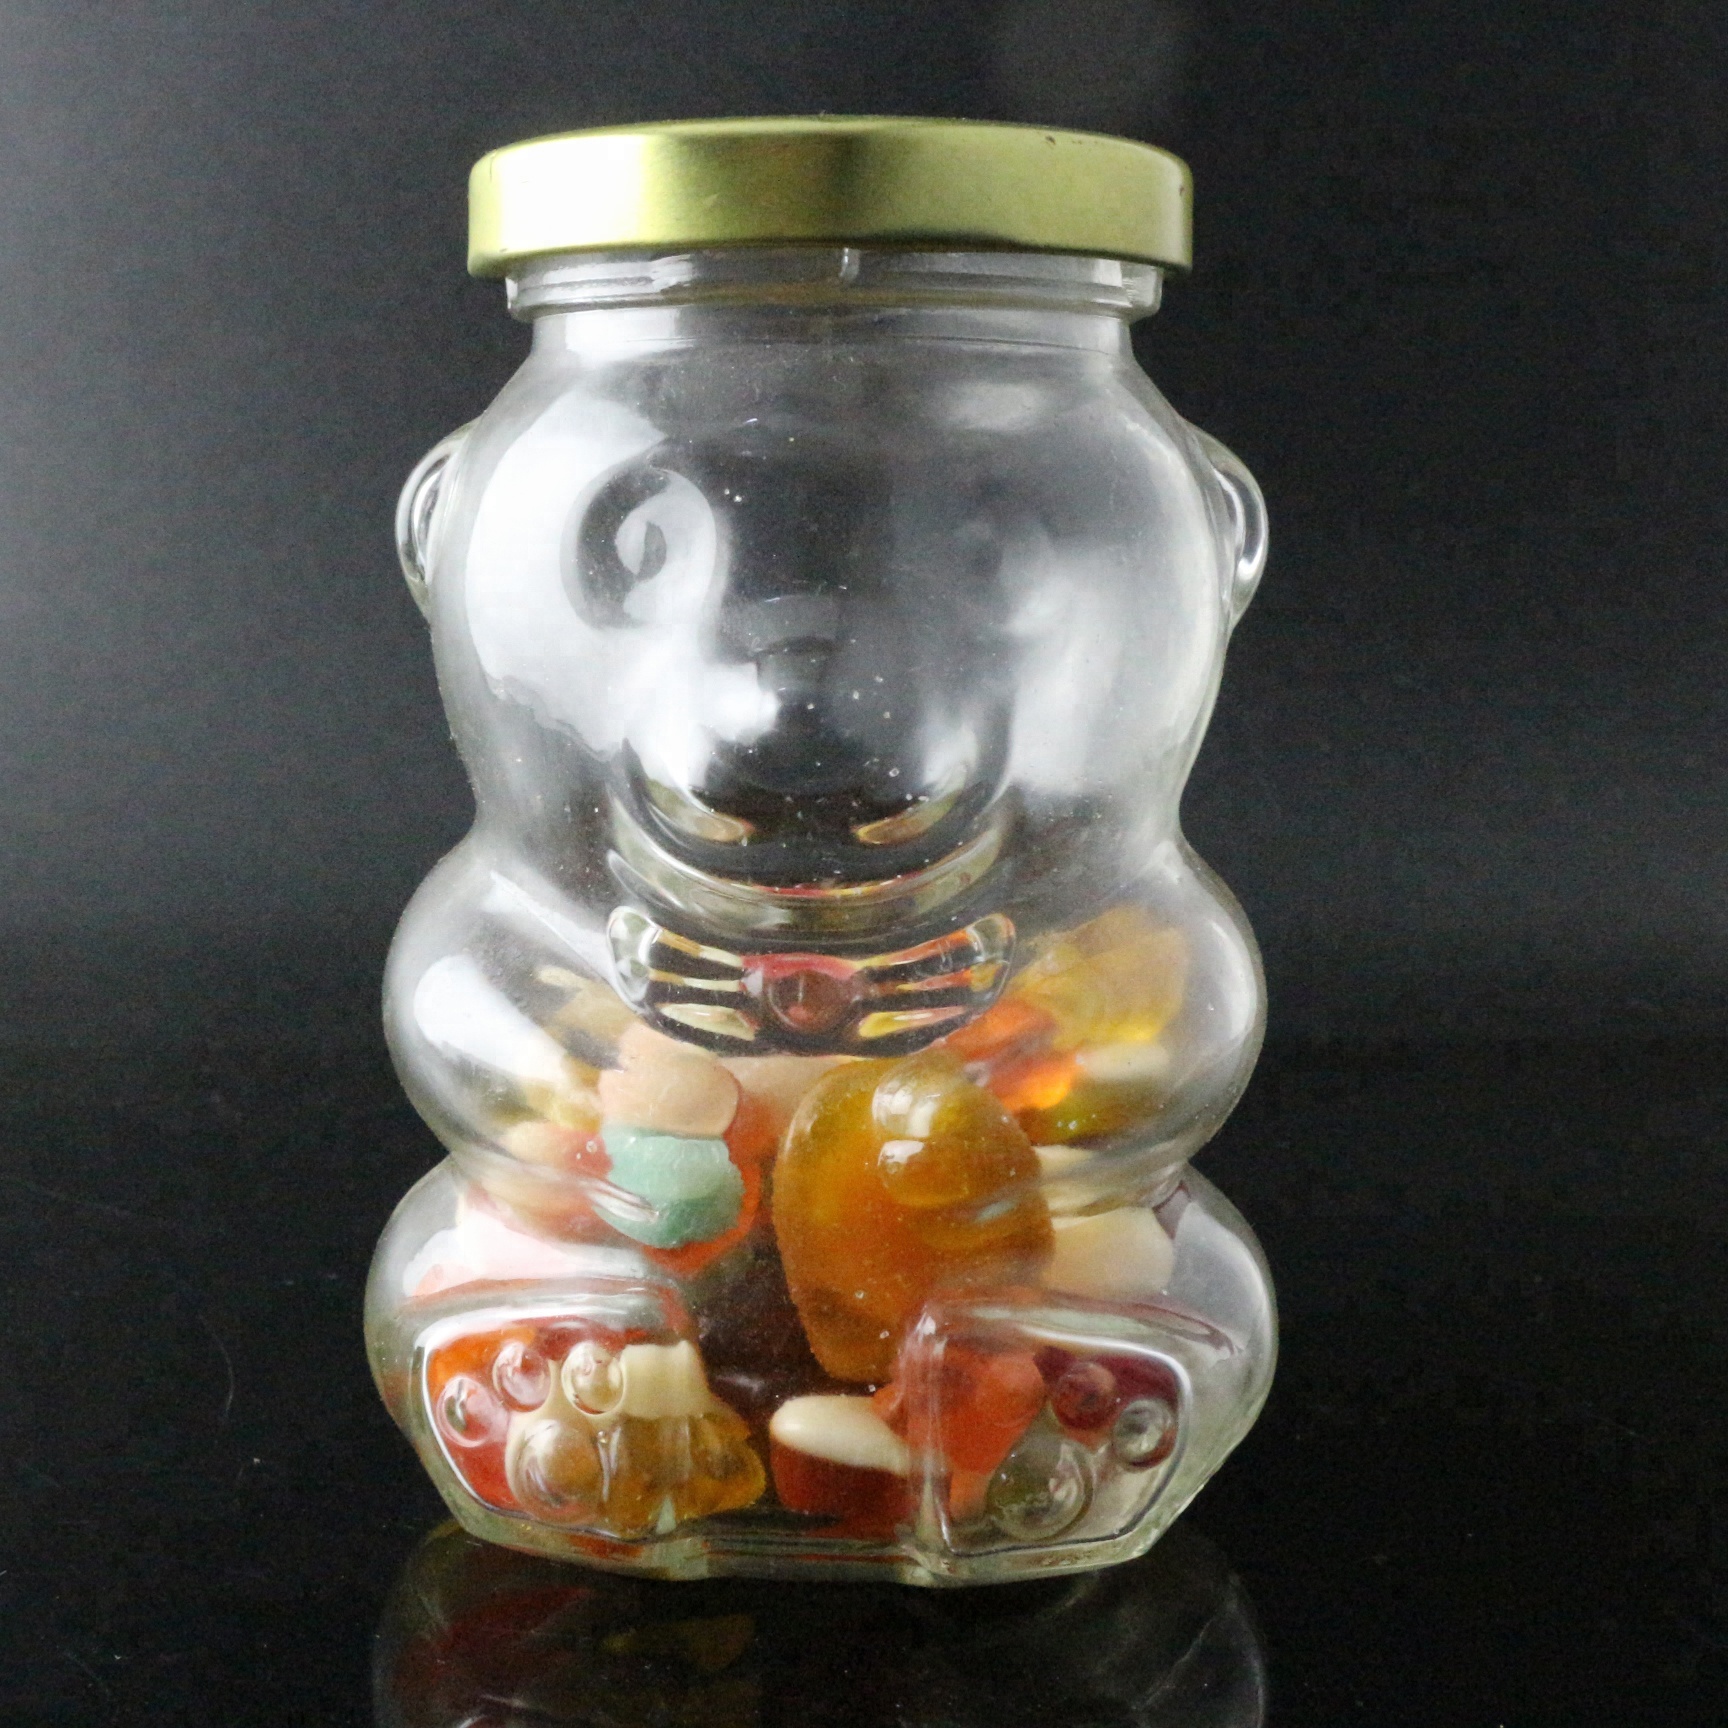 9 oz Honey Bear Shaped Glass Jar Glass Bottle Mei Black White Gold Metal Lid